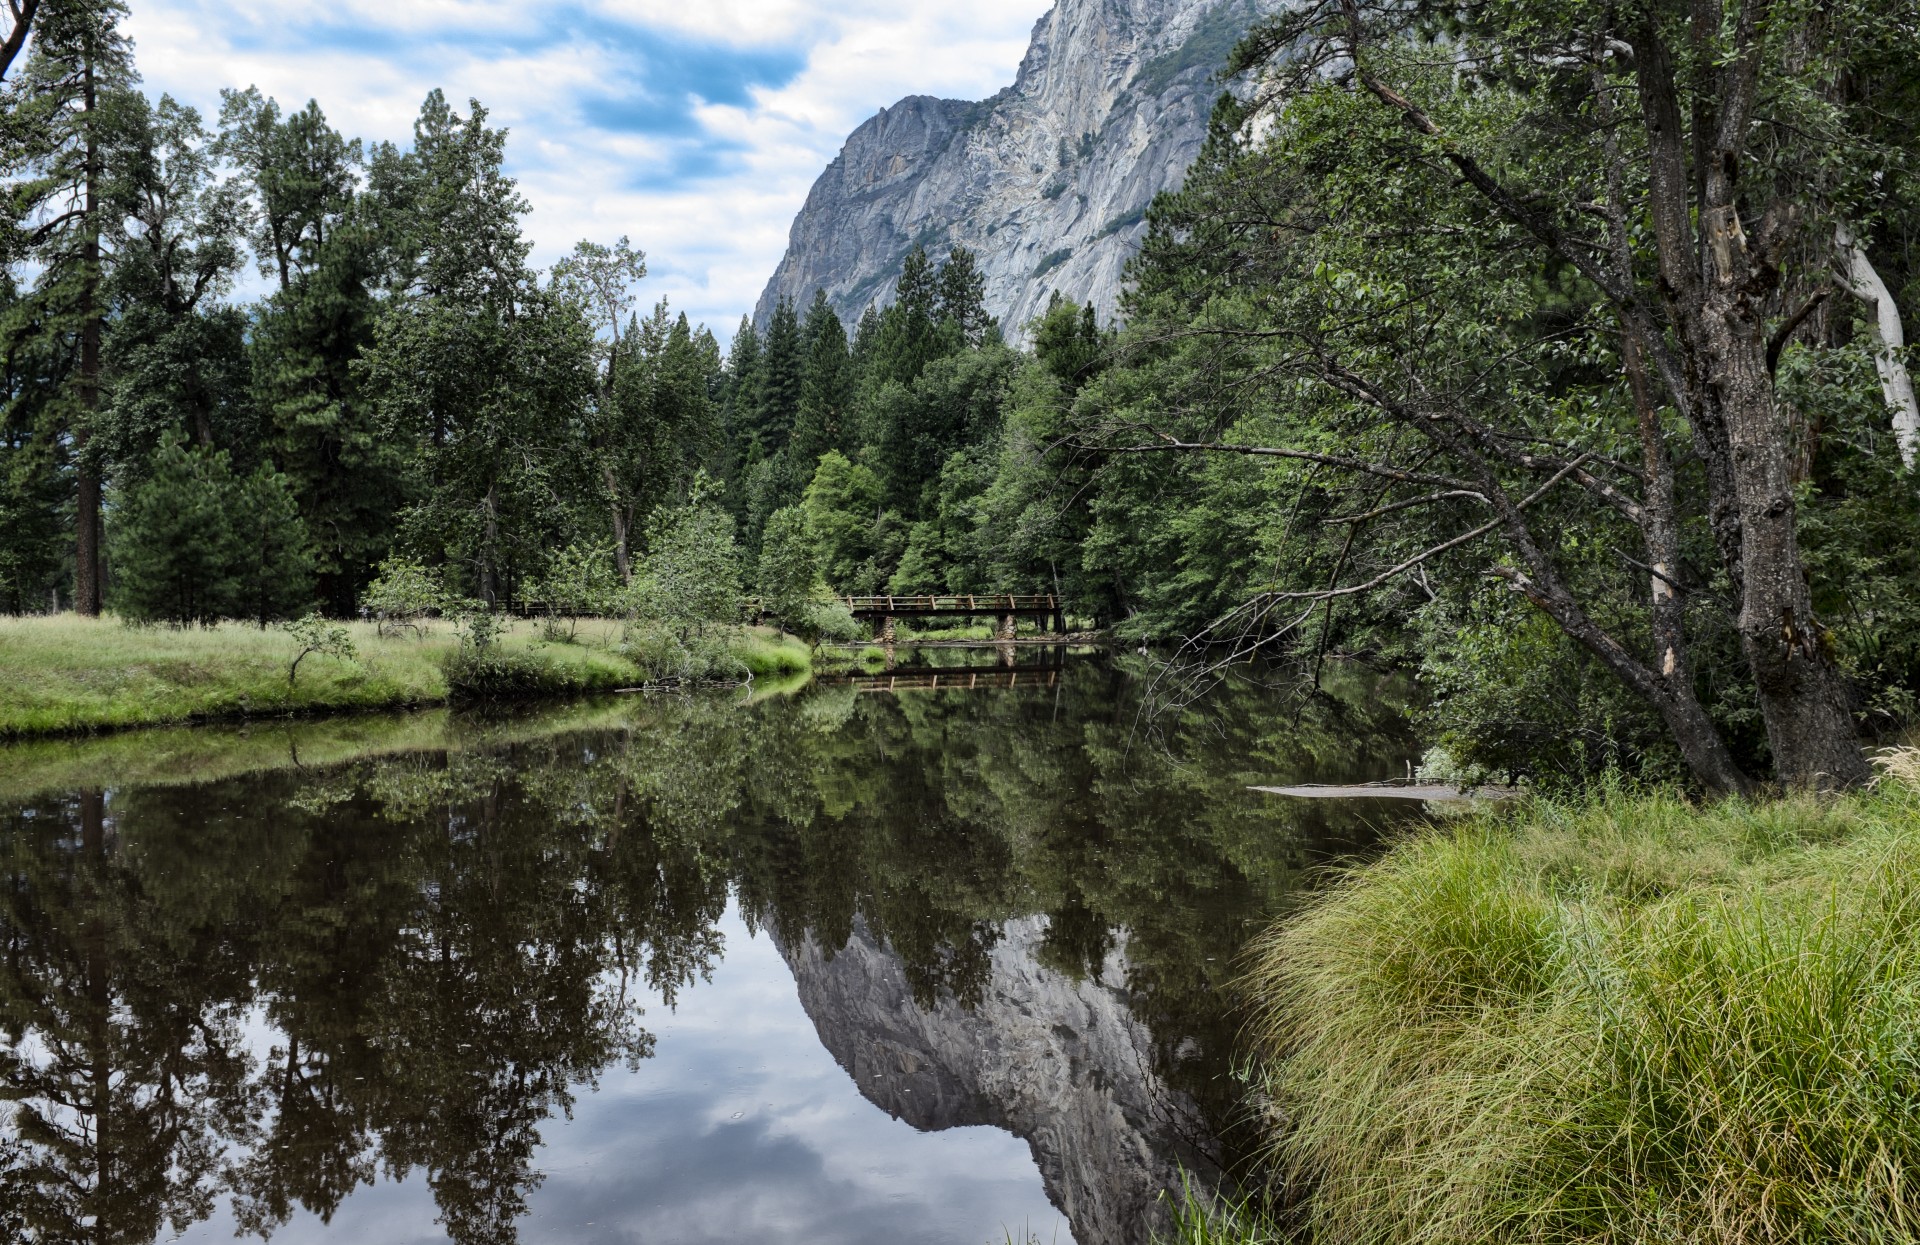 Yosemite mountains